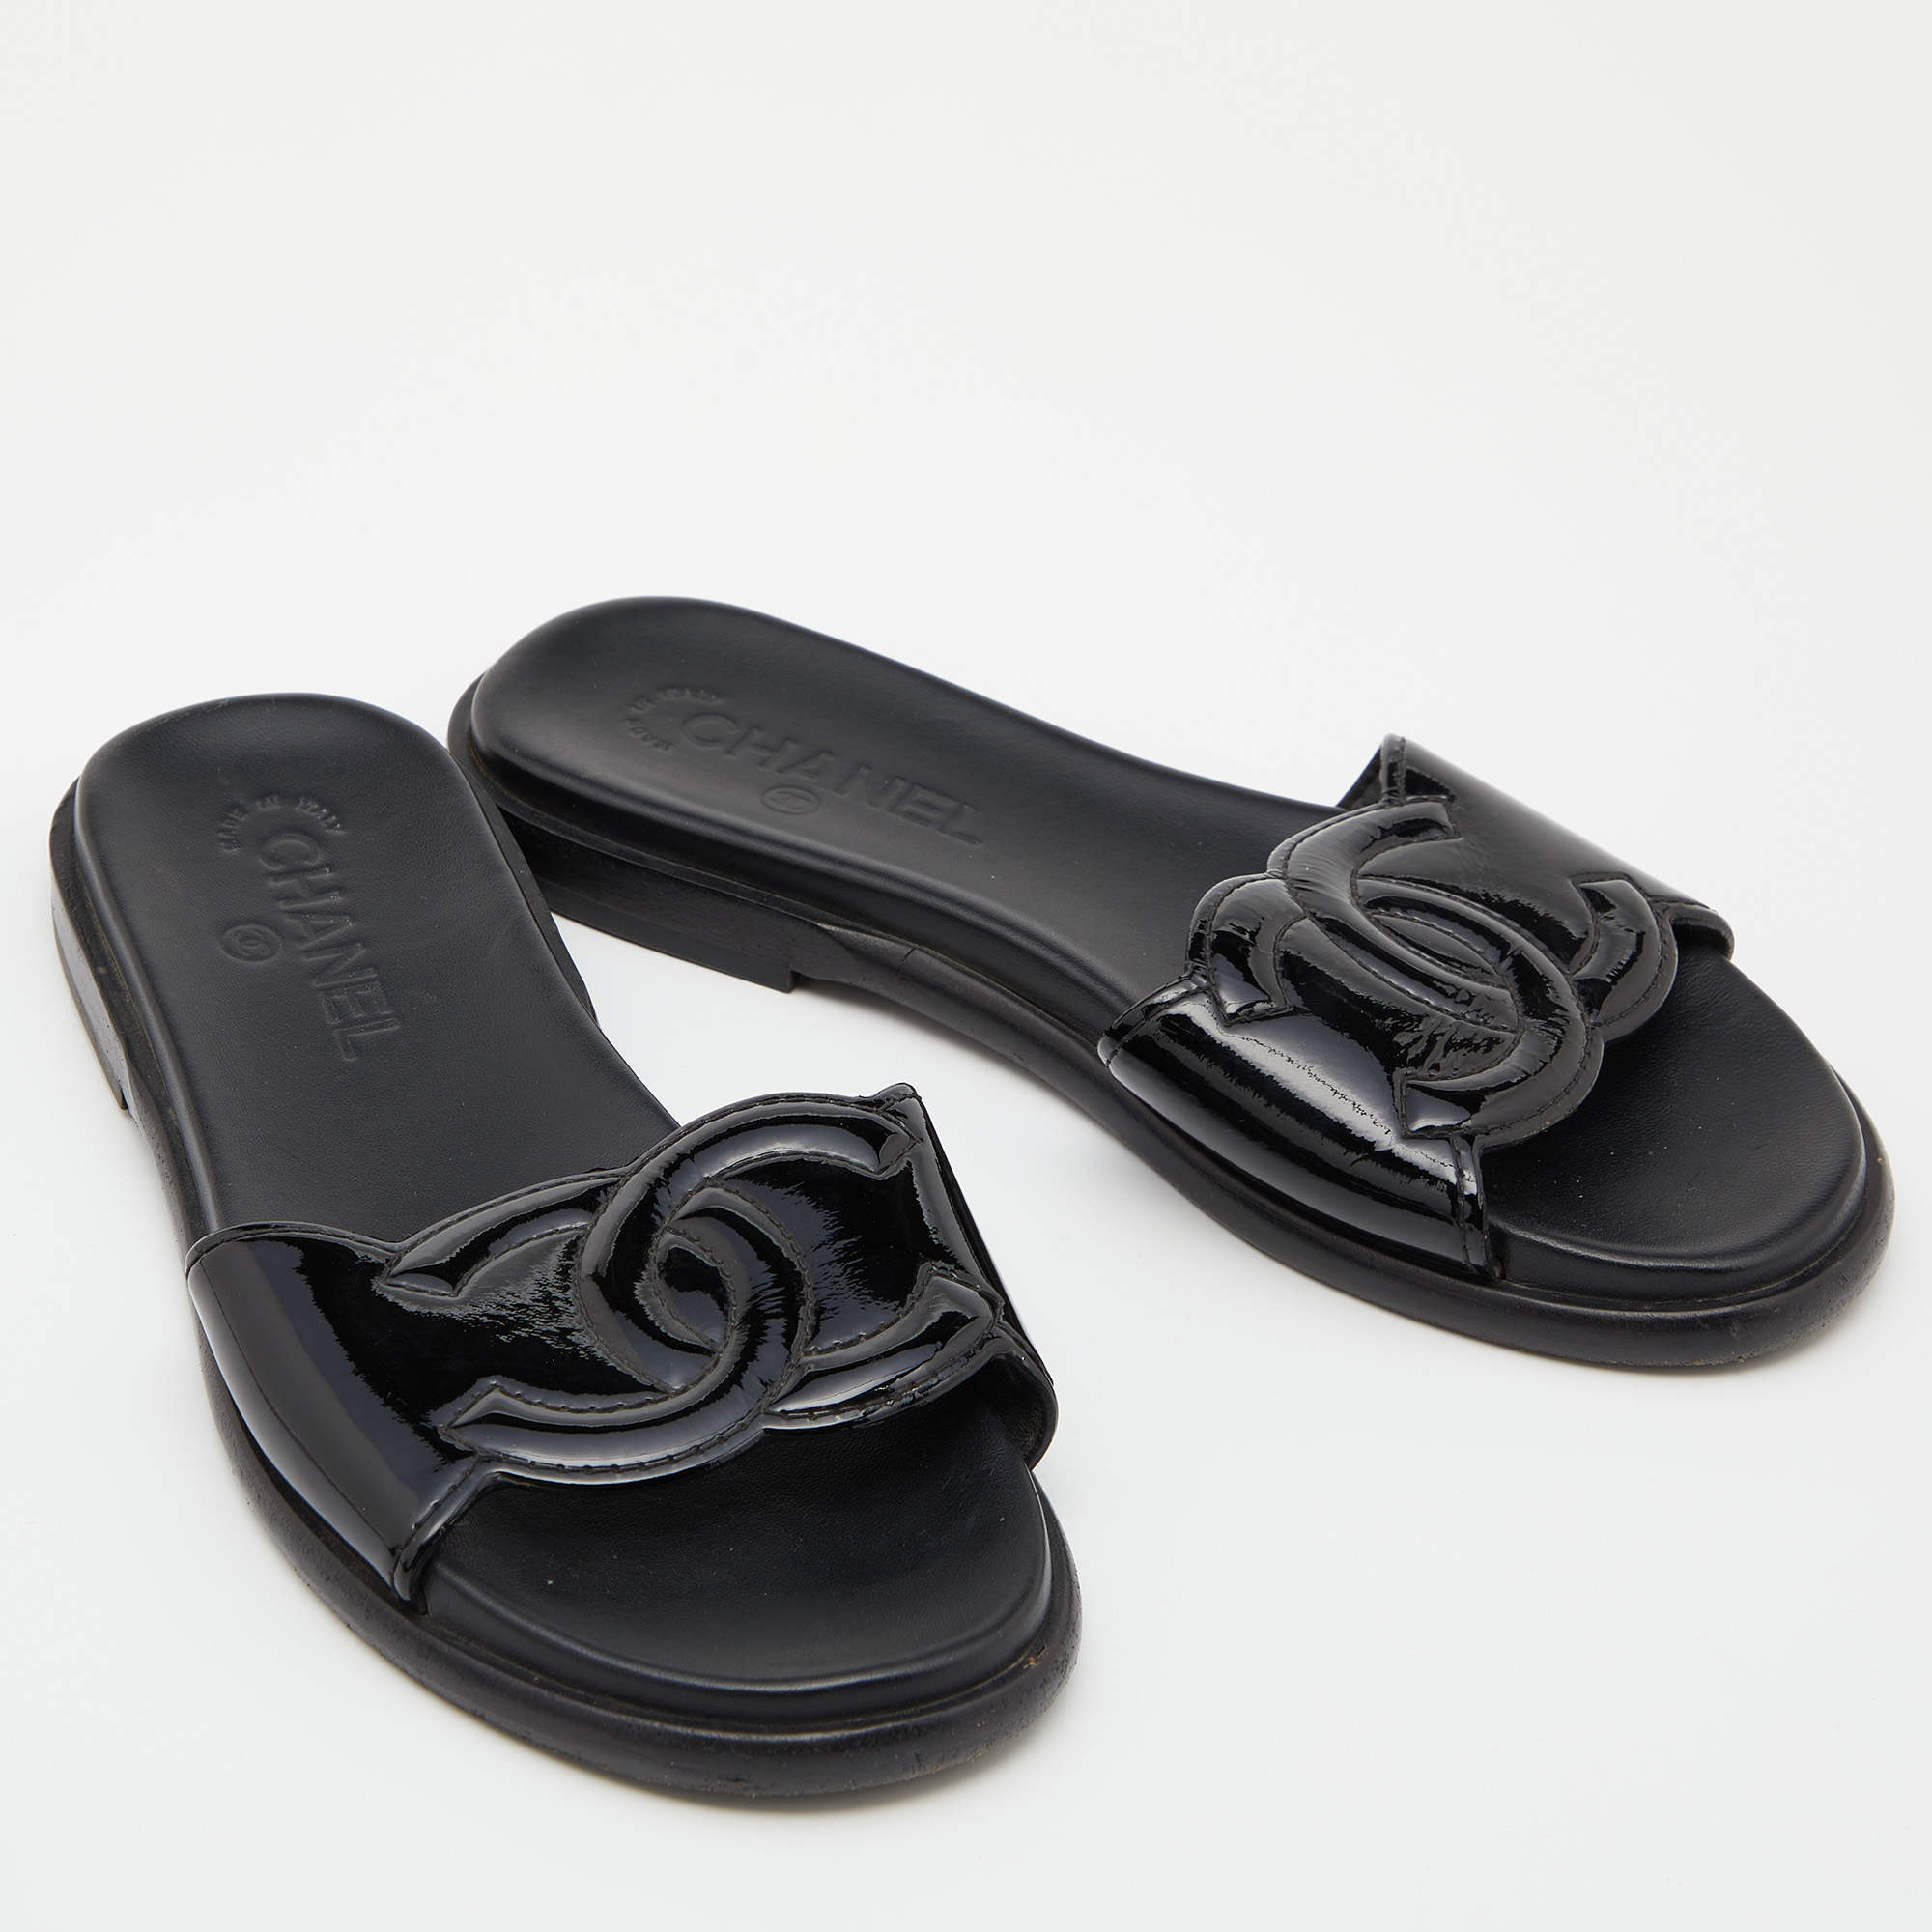 Chanel Black Patent Leather CC Flats Slide Size 37 Chanel